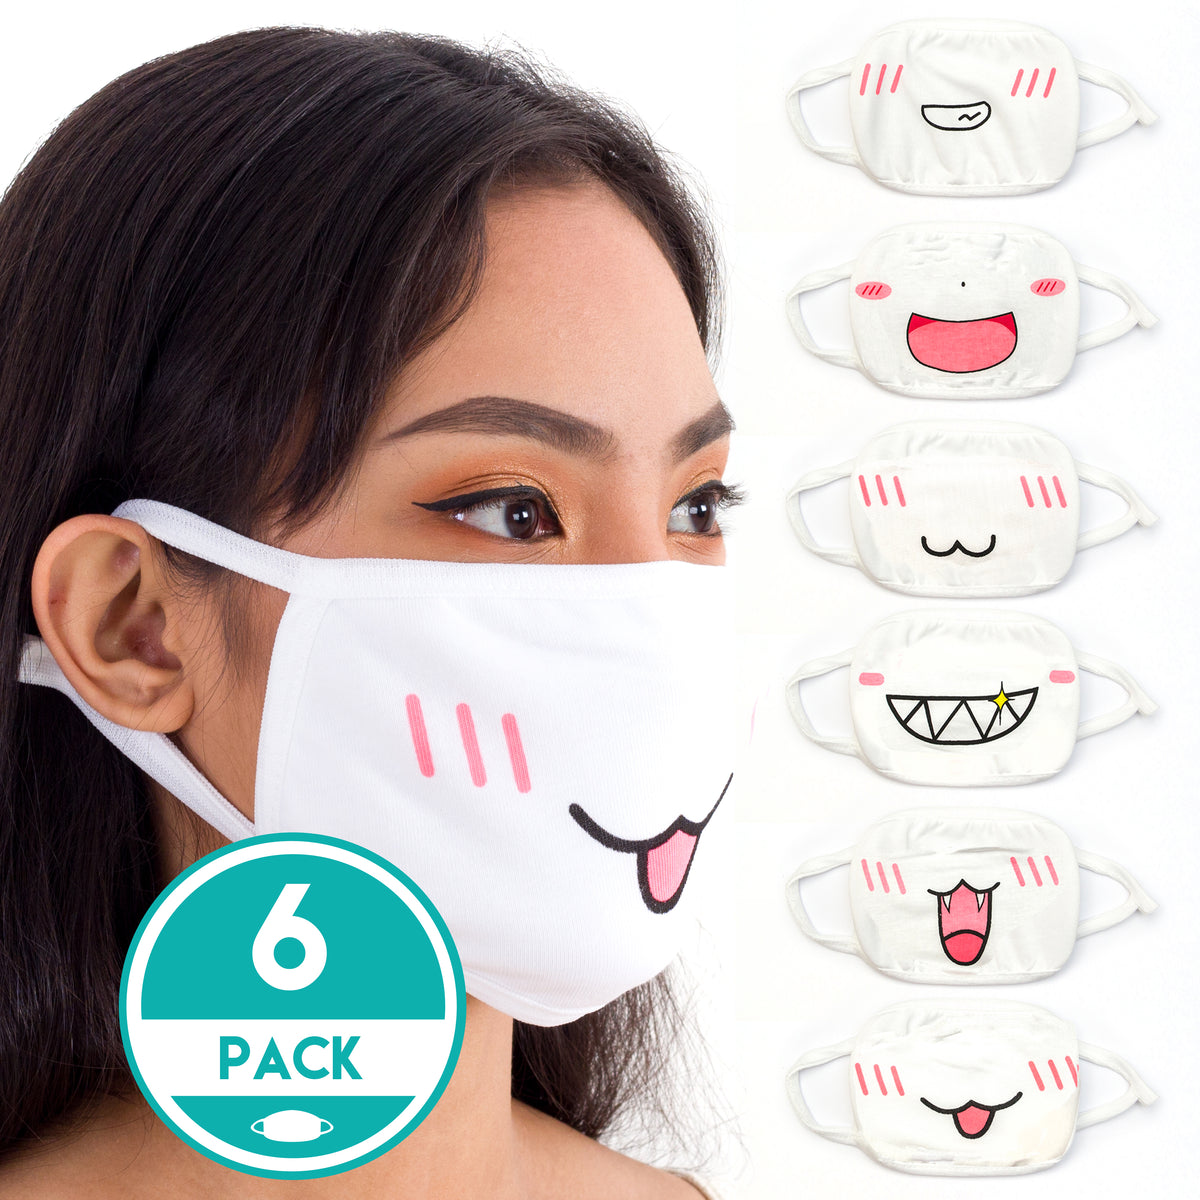 Face Masks (6 Pack - White Anime Designs) White Cotton Mask - Adult Cute Anime Design - Face Mask Reusable, Washable, Breathable, Adjustable